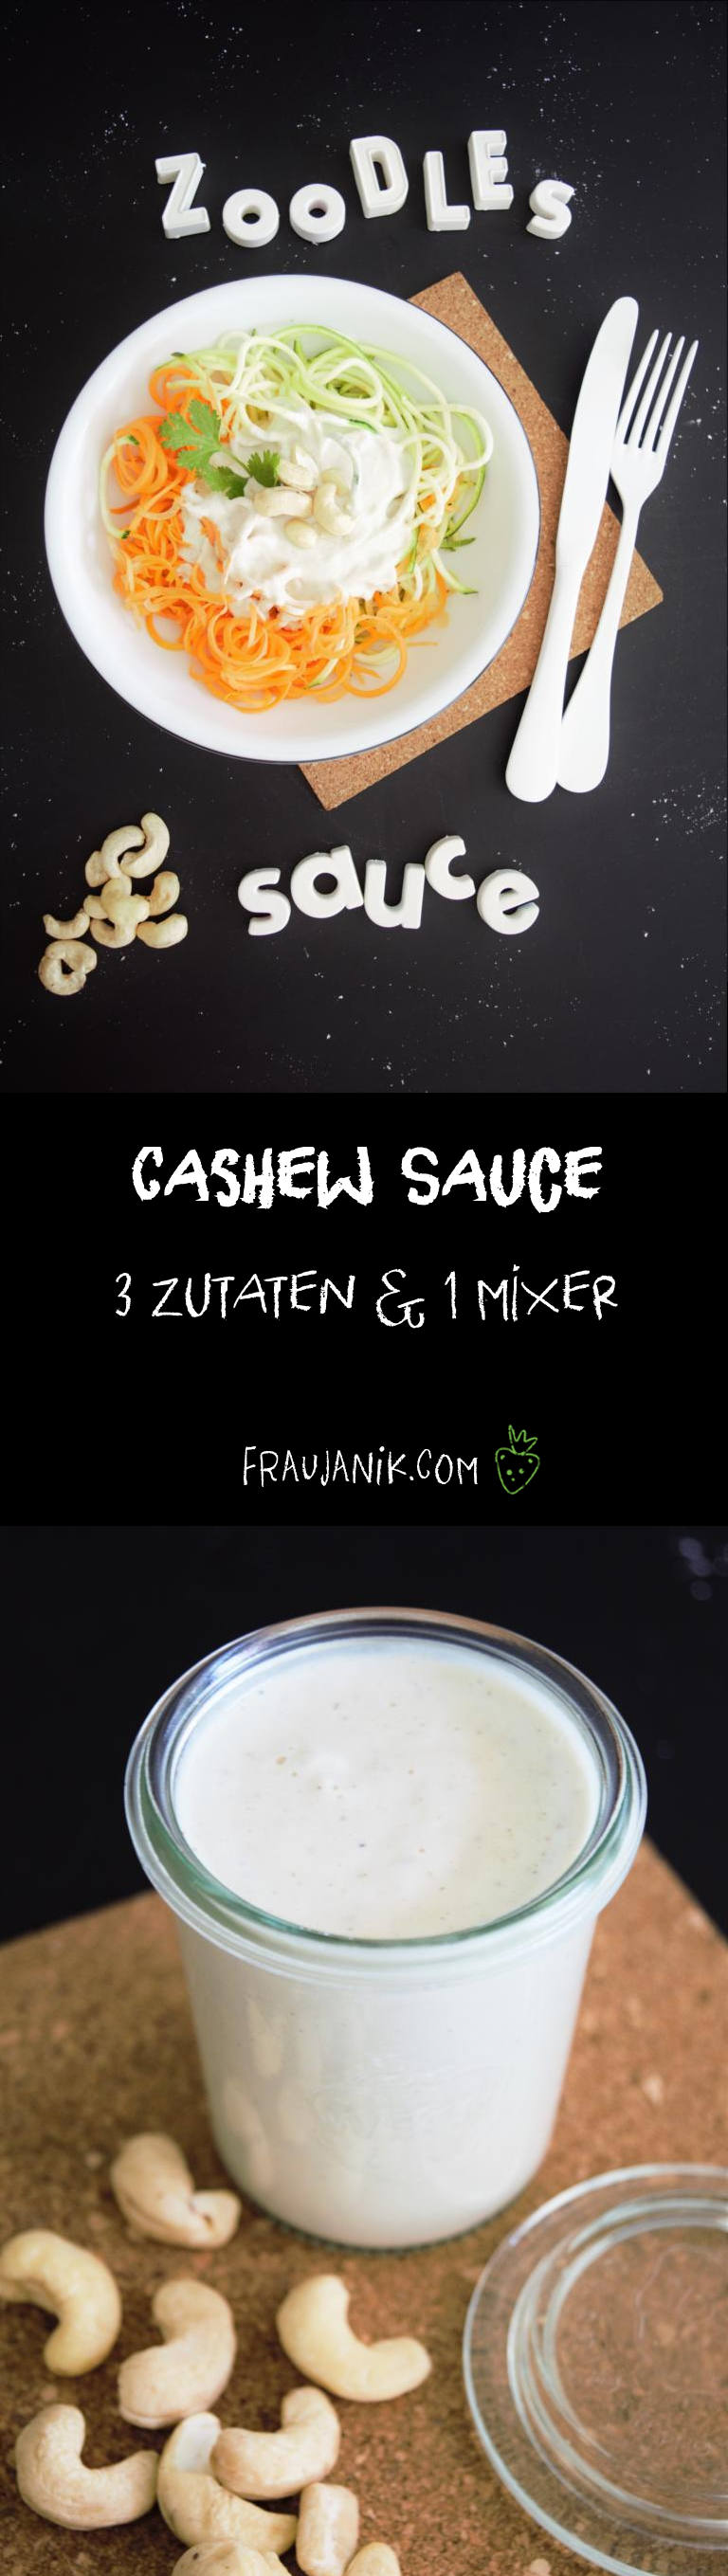 Zoodles mit Cashew Sauce, vegan